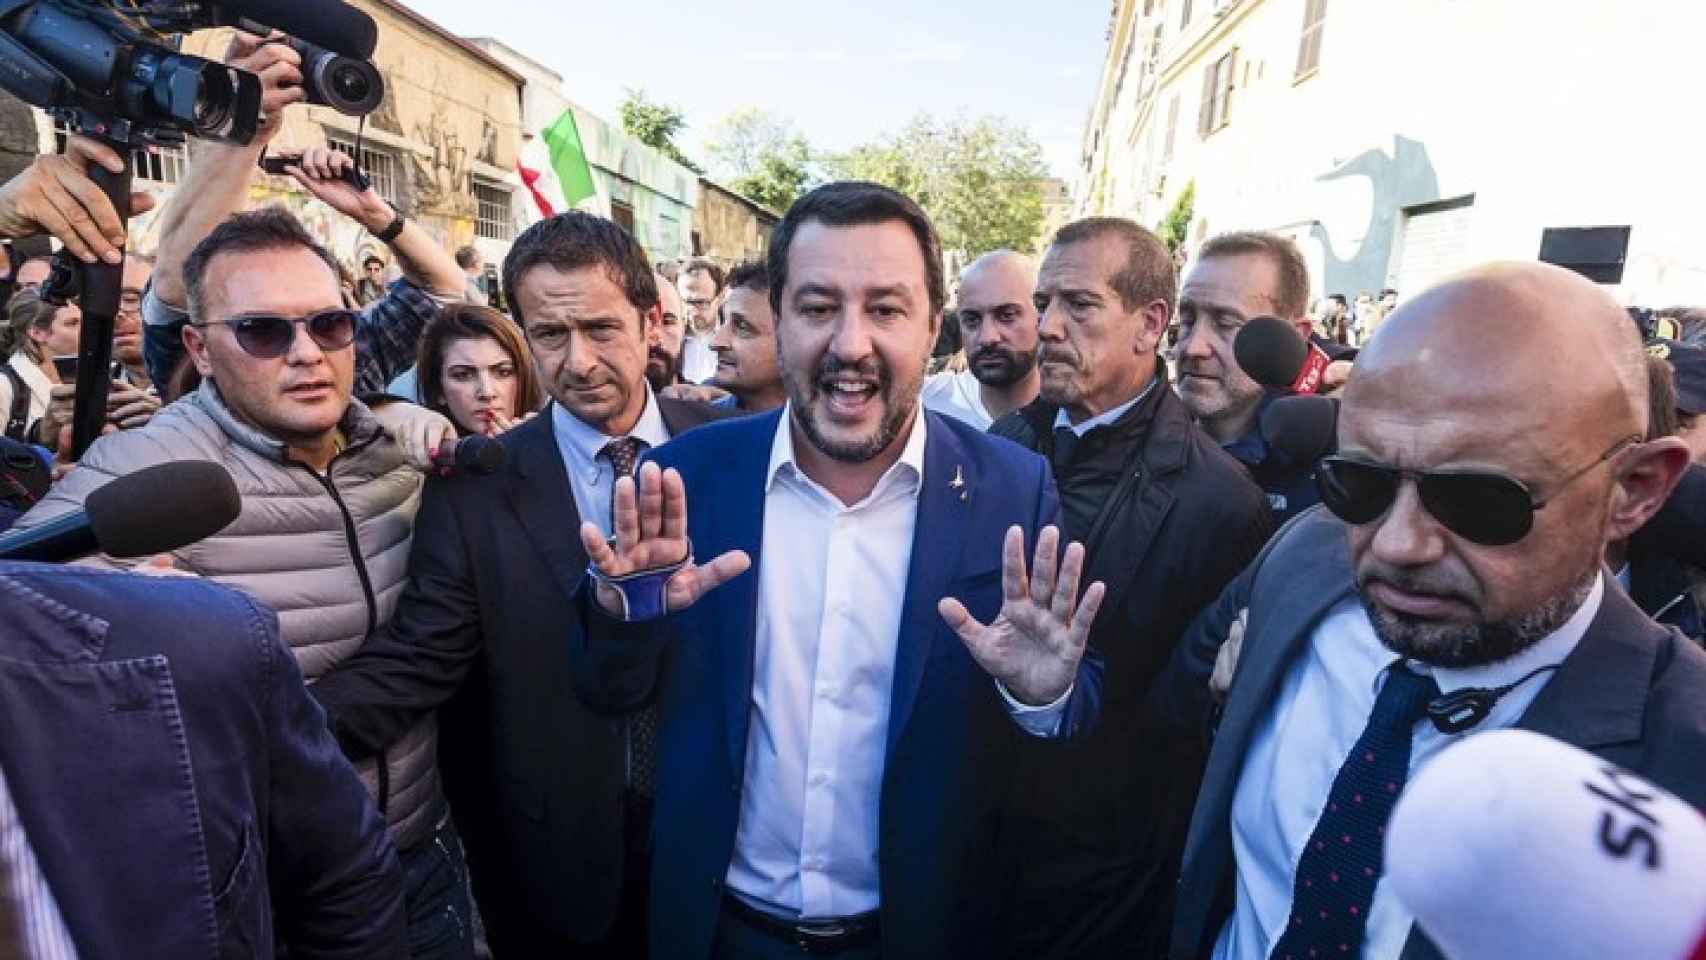 Matteo Salvini llega a San Lorenzo.